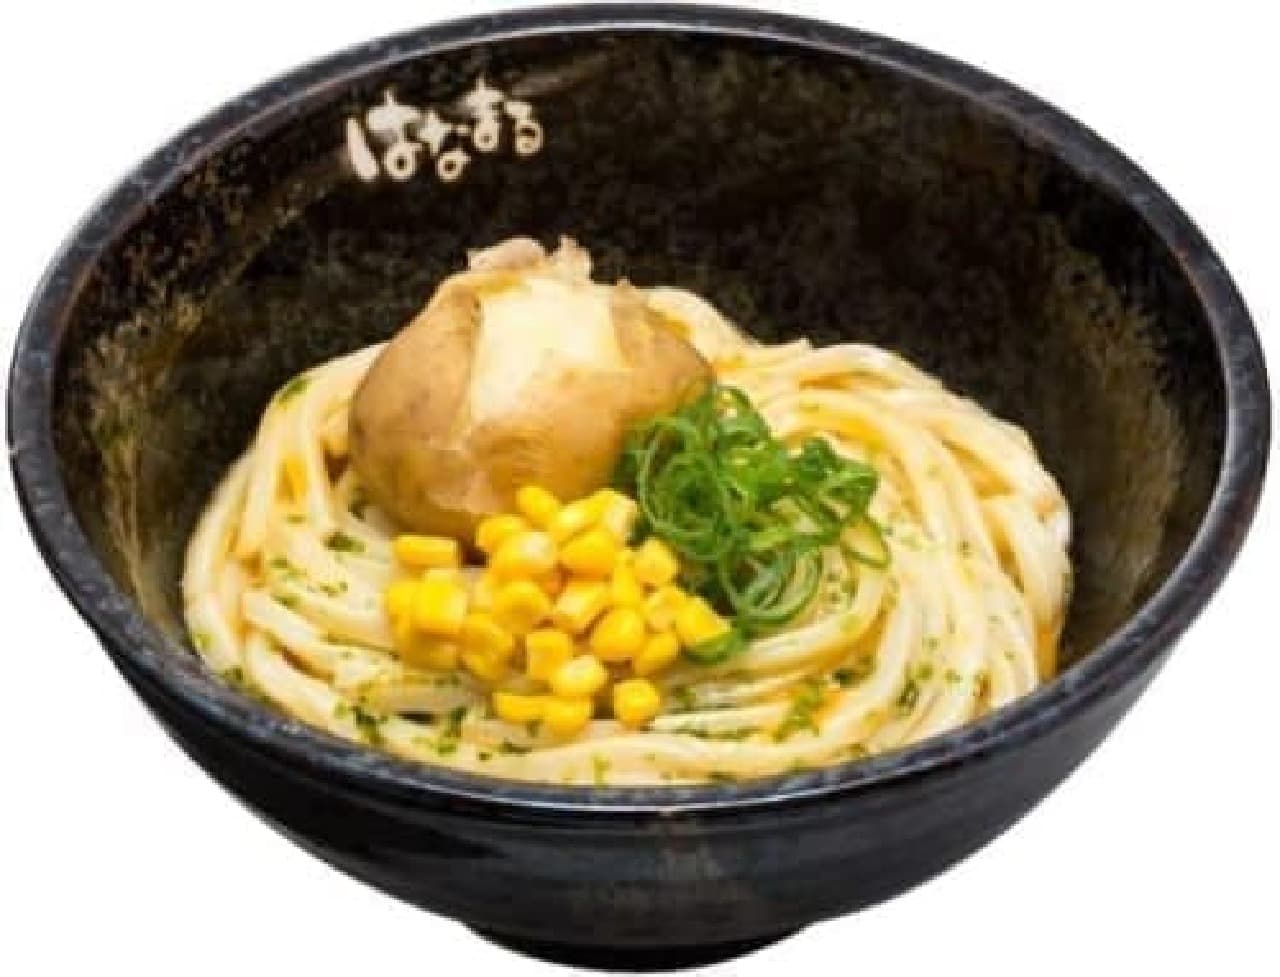 Topped with Jaga butter on Kamatama udon?